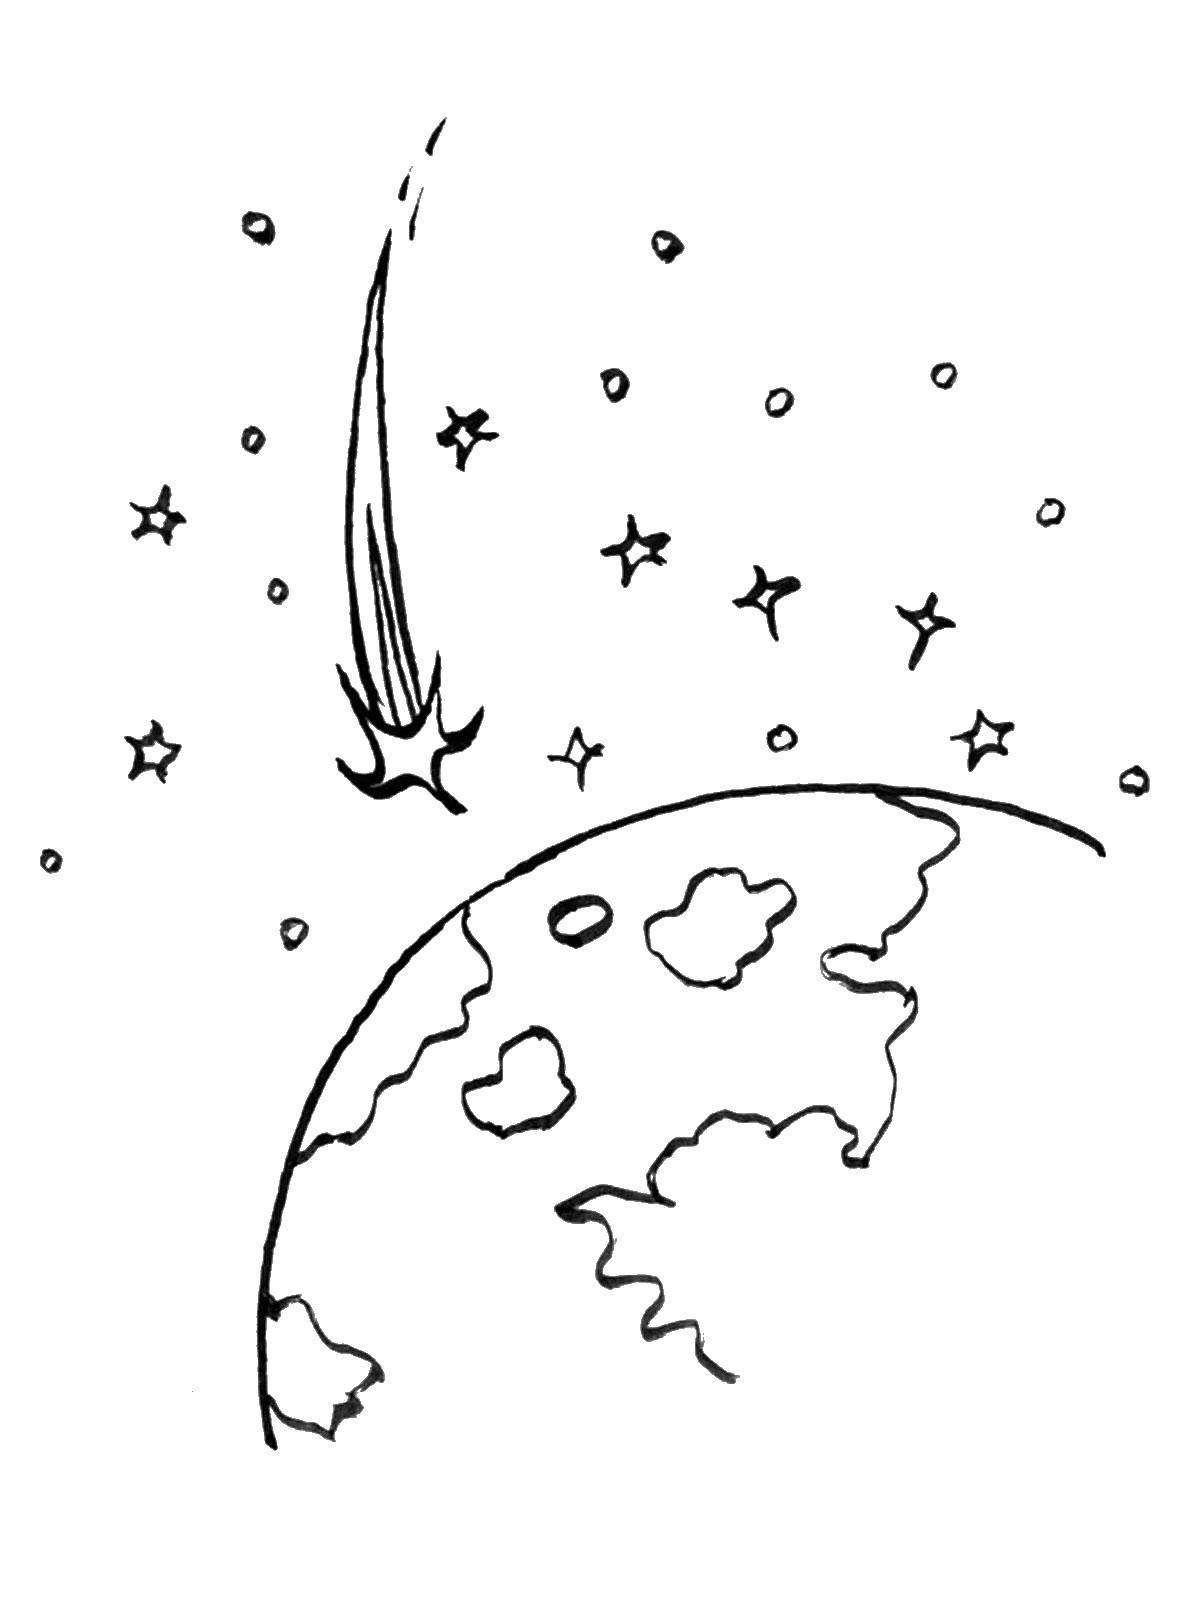 Опис: розмальовки  Комета і земля. Категорія: День космонавтики. Теги:  - космос, планета, ракета, Гагарін, день космонавтики, комета.